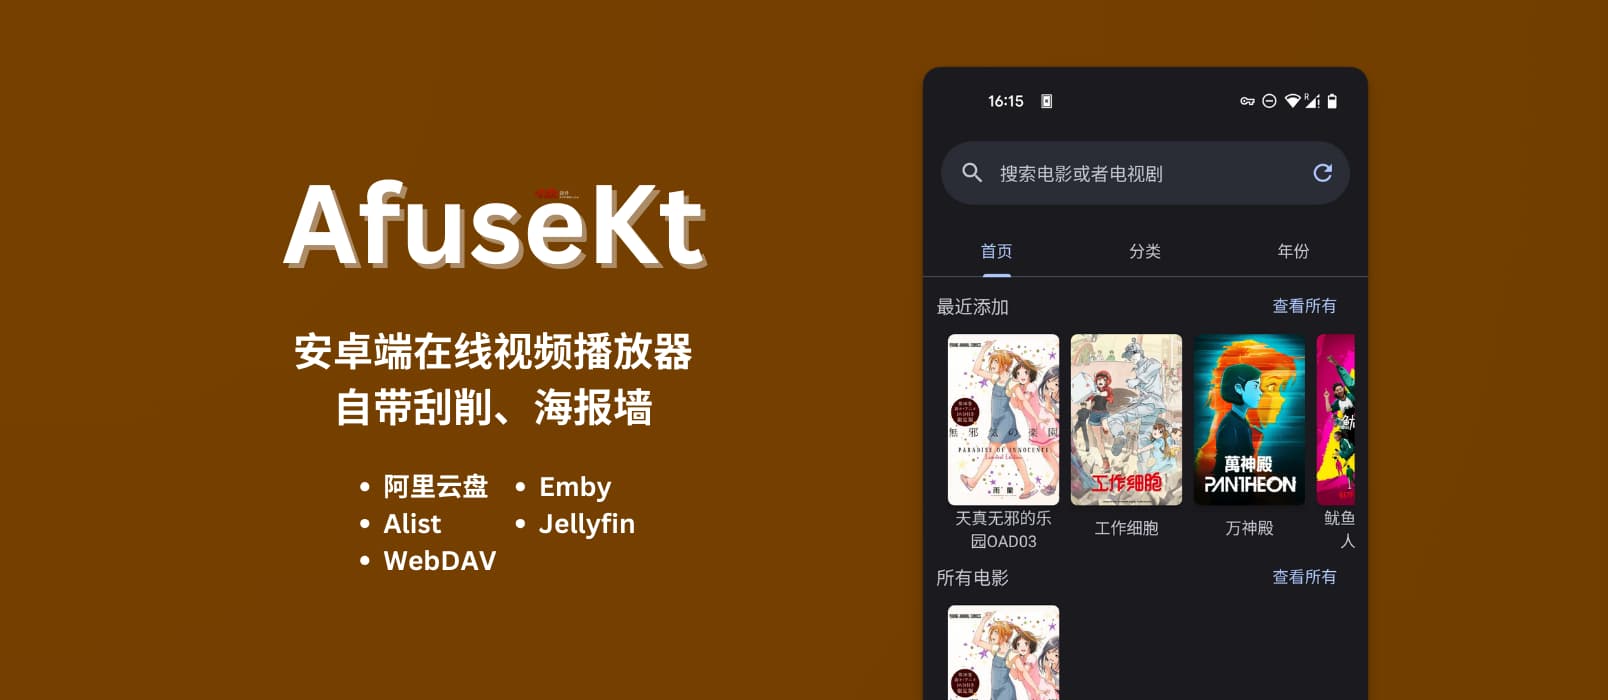 AfuseKt - 安卓端在线视频播放器：阿里云盘、Alist、WebDAV、Emby、Jellyfin，自带刮削、海报墙